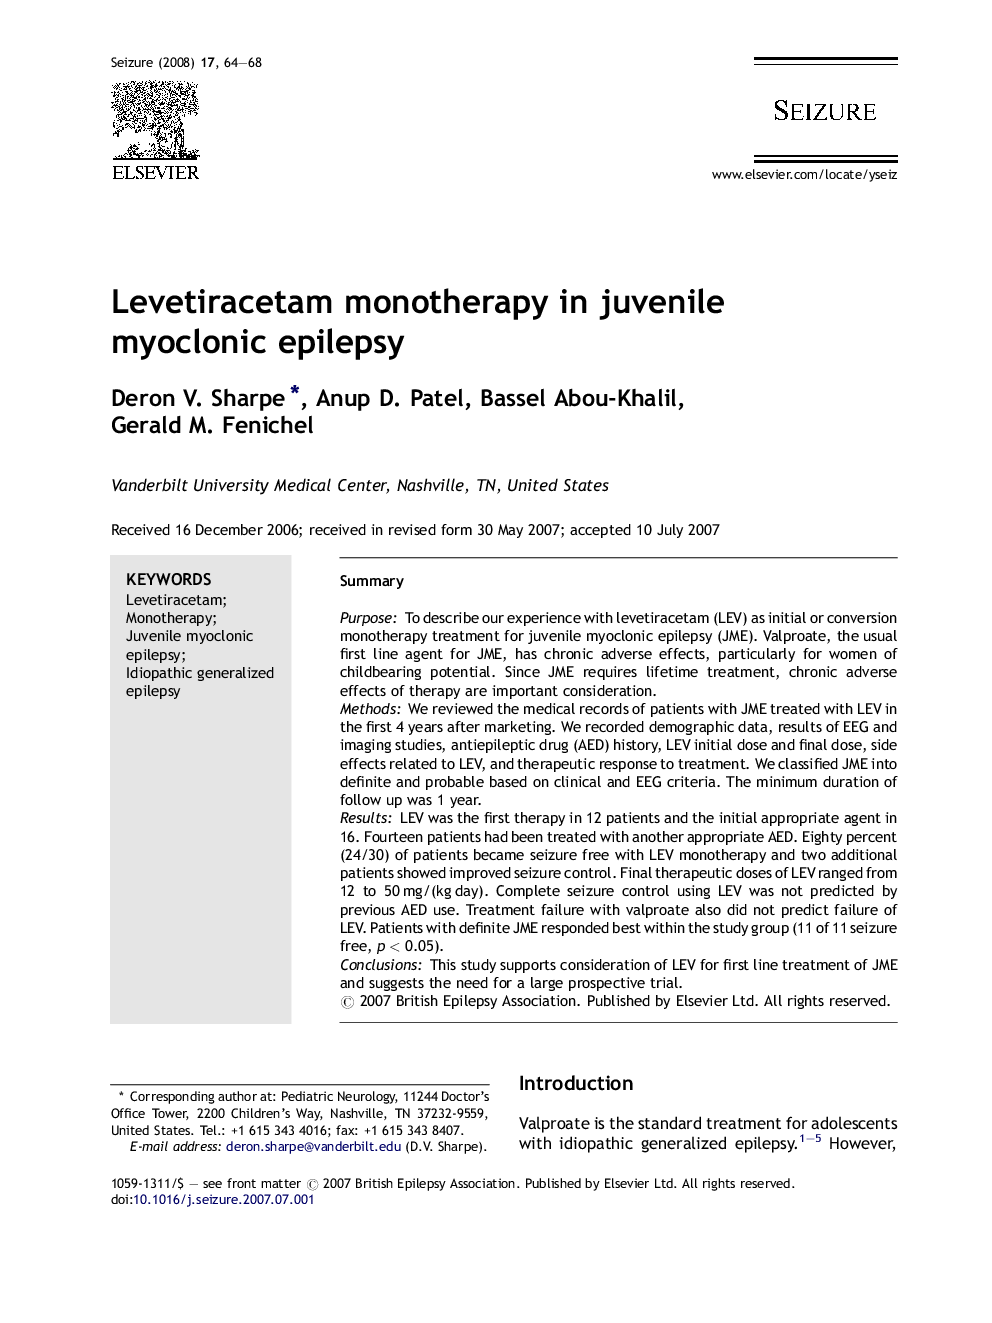 Levetiracetam monotherapy in juvenile myoclonic epilepsy